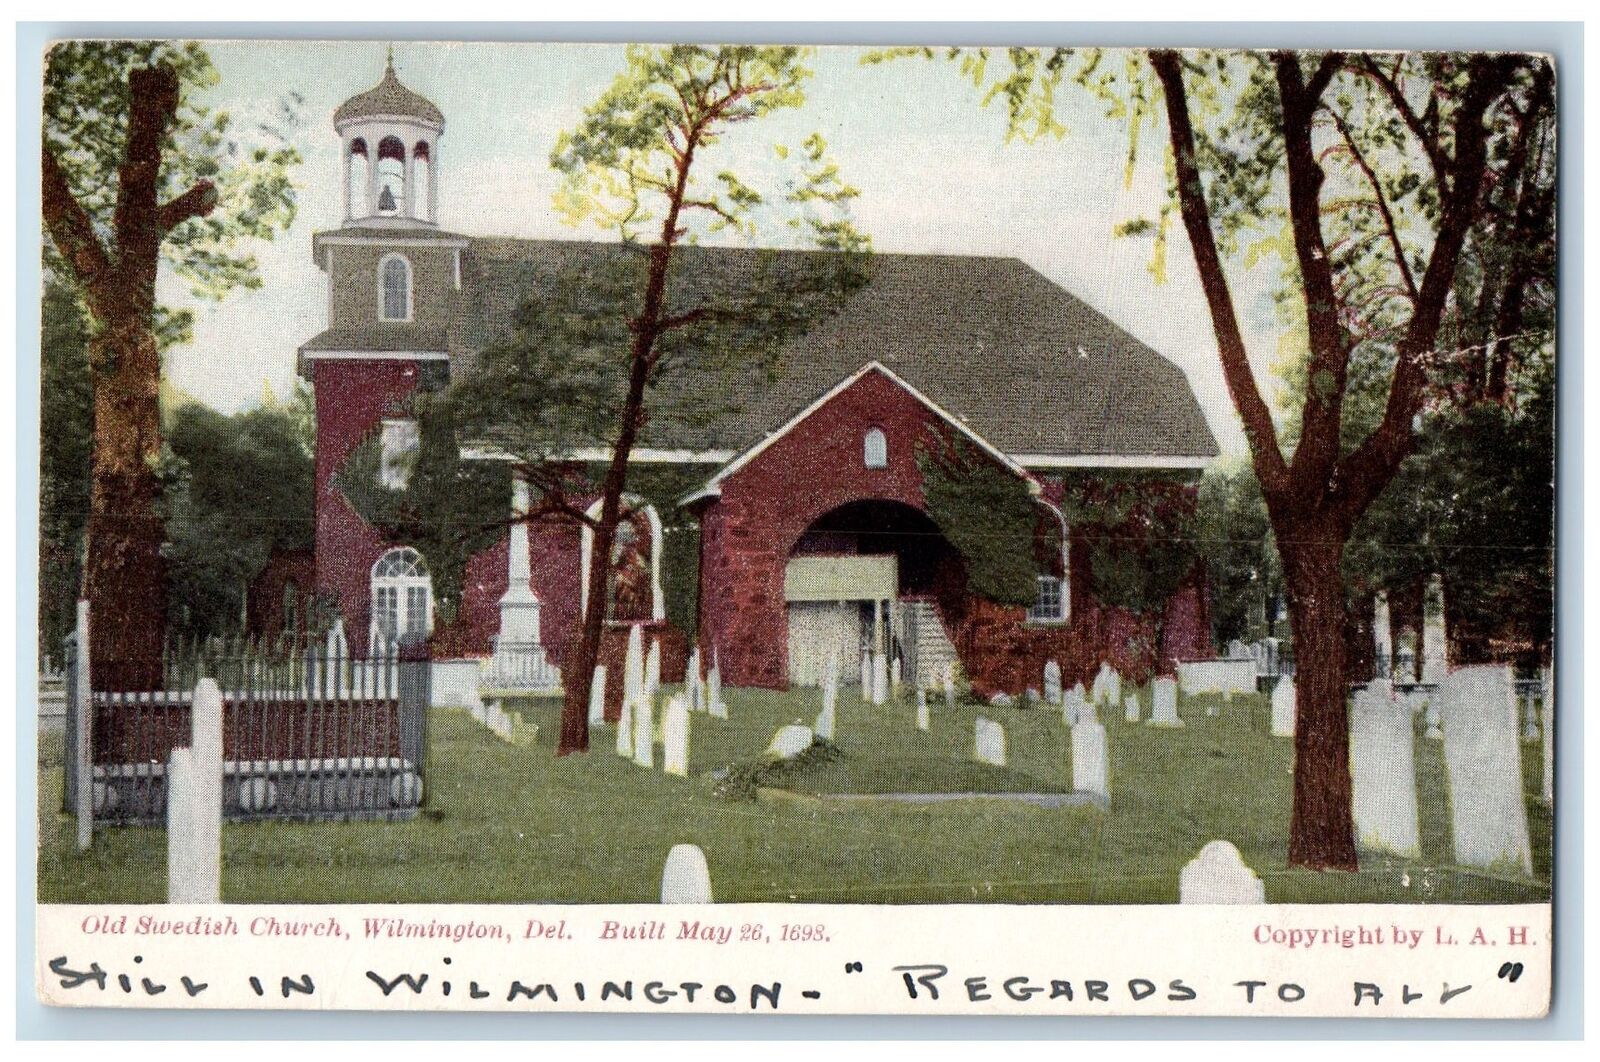 c1905 Old Swedish Church Built May 26, 1698 Wilmington Delaware Antique Postcard